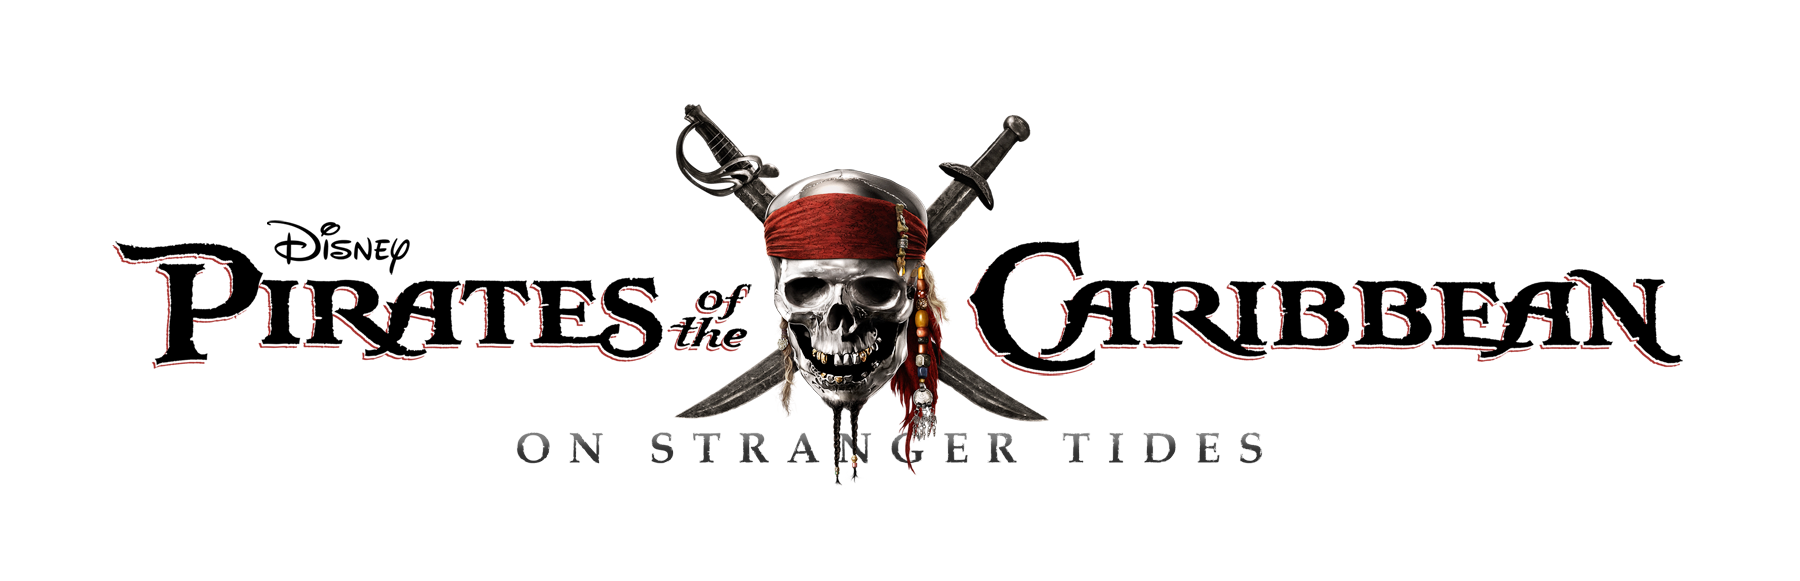 Pirate Logo Transparent Image